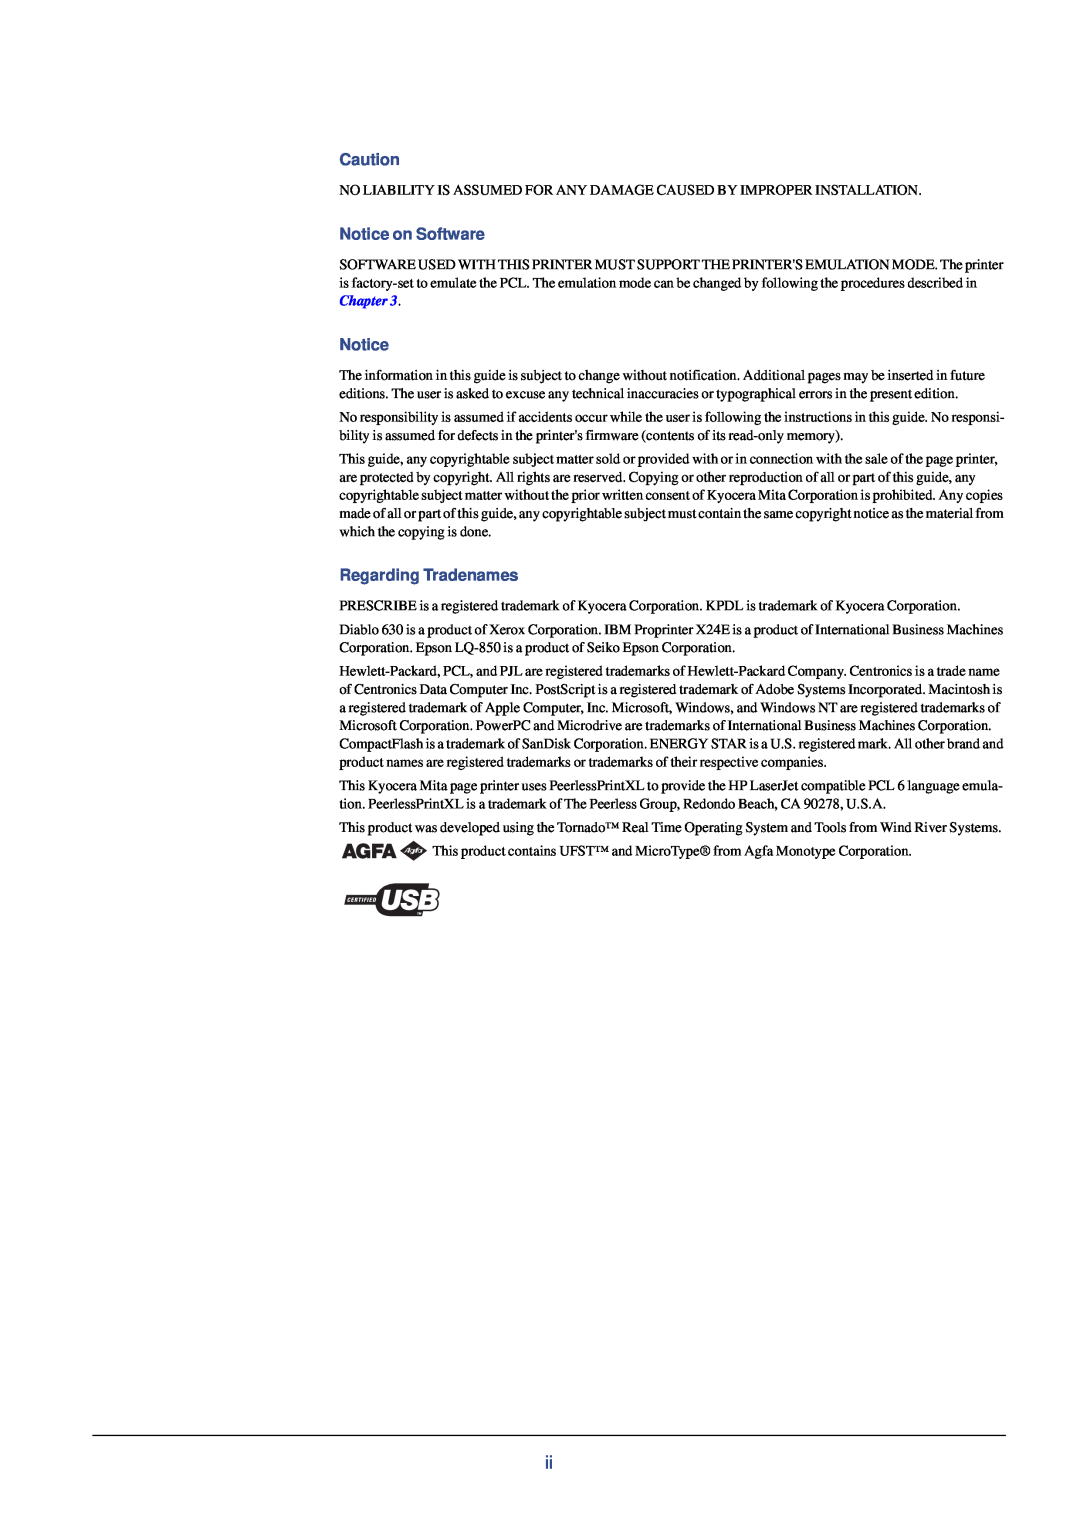 Xerox FS-C8008N, FS-C8008DN manual Notice on Software, Regarding Tradenames 